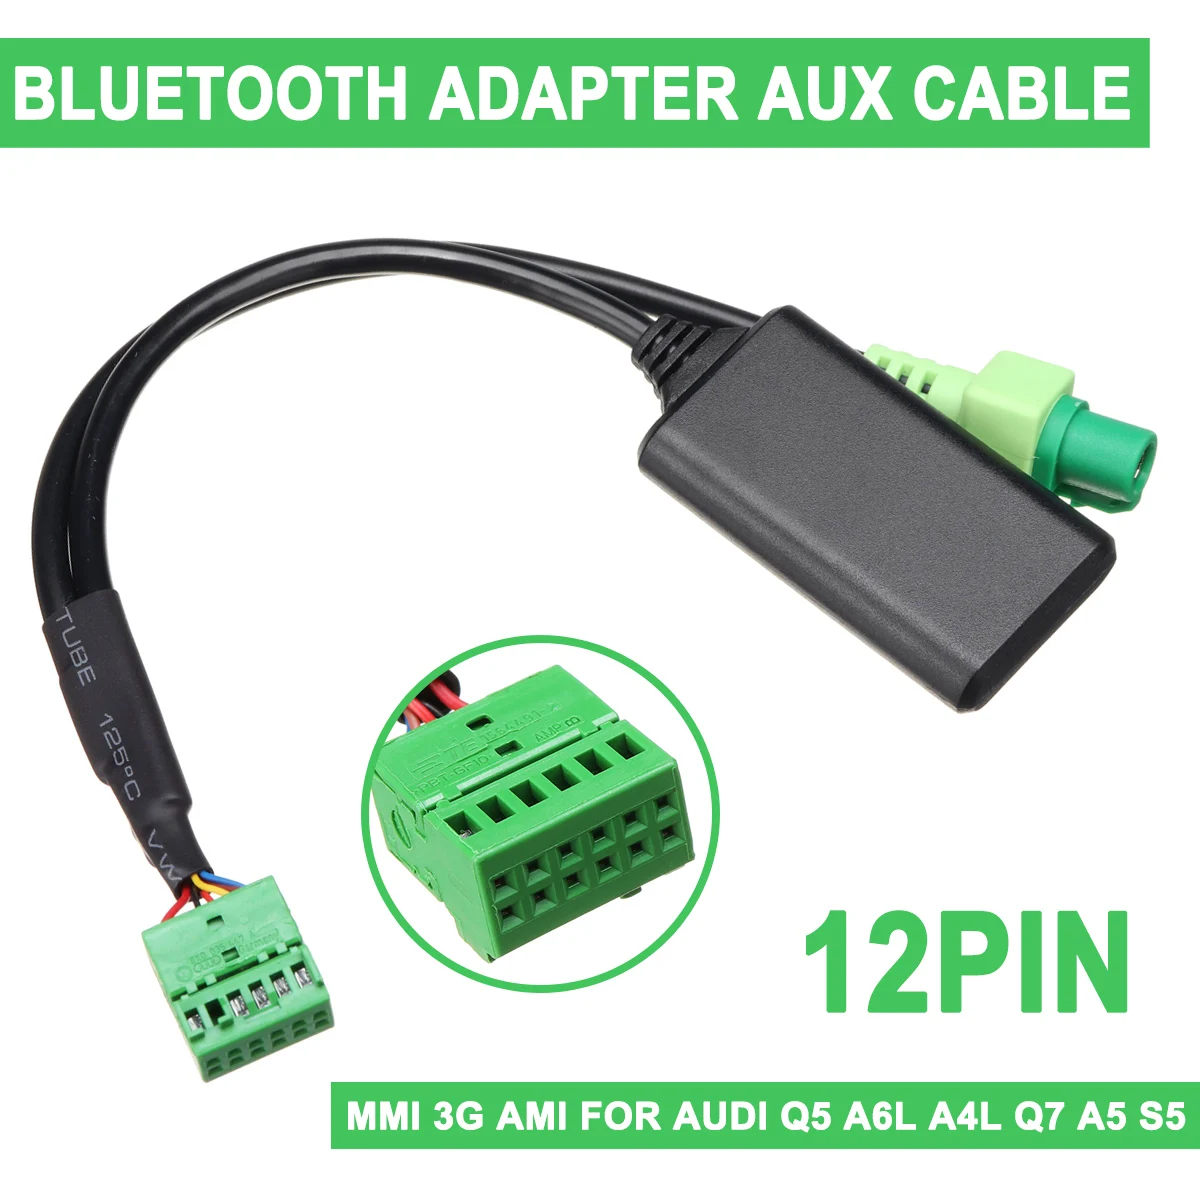 Car MMI 3G AMI per Audi Q5 A6L A4L Q7 A5 S5 cavo adattatore Audio AUX bluetooth Wireless interfaccia presa MMI ingresso Audio